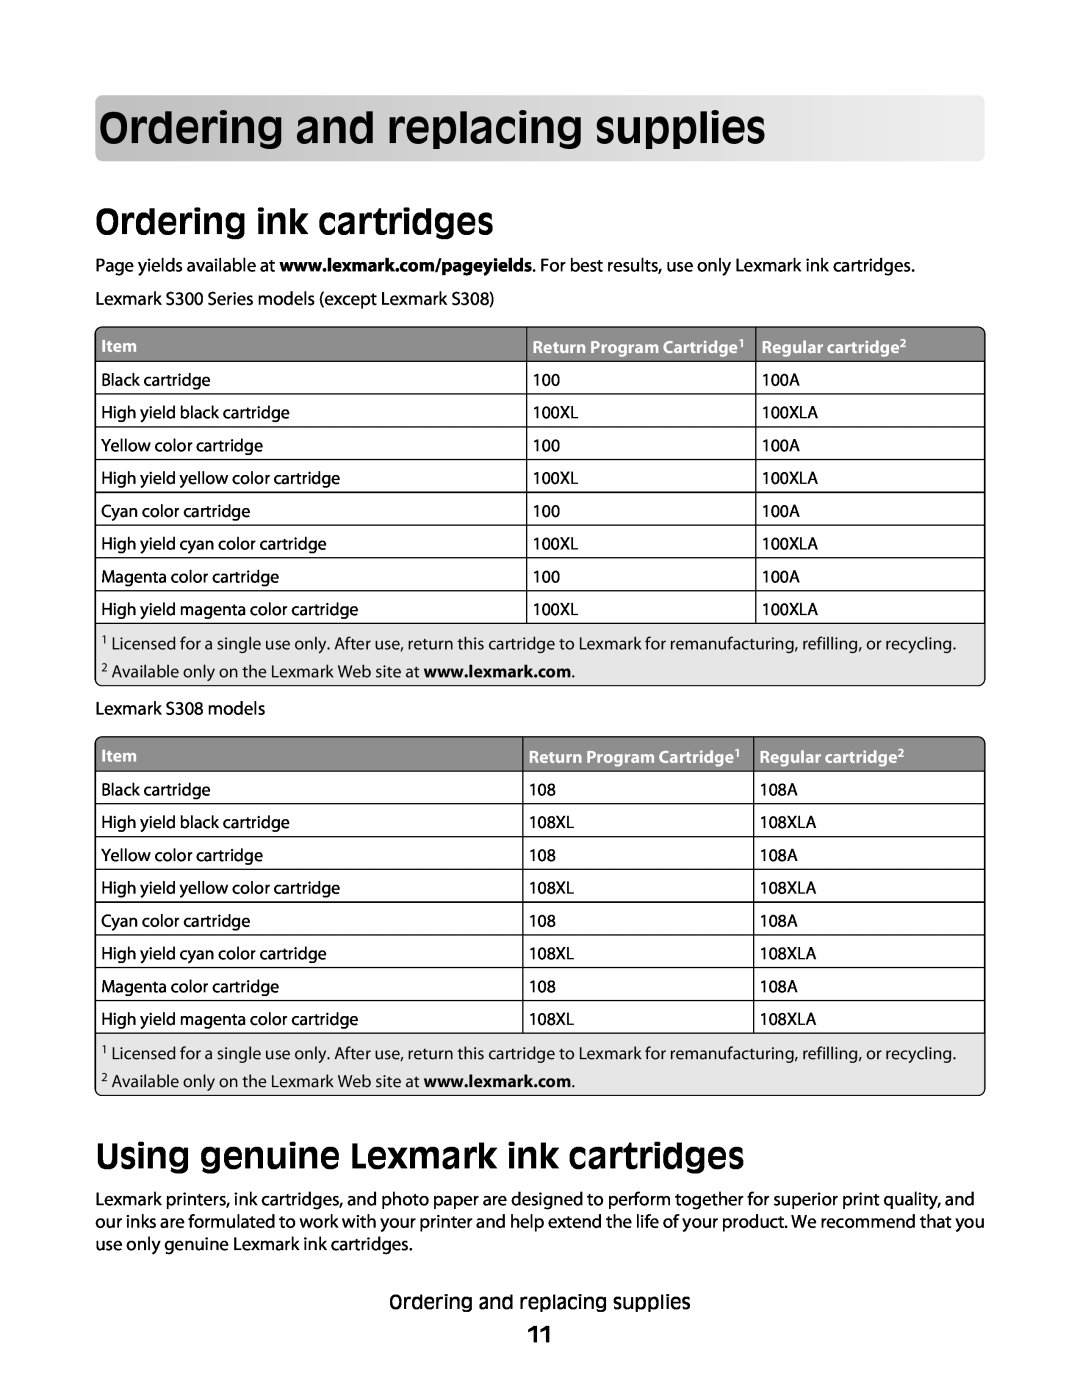 Lexmark 10E, 101 manual Ordering and replacingsupplies, Ordering ink cartridges, Using genuine Lexmark ink cartridges, Item 